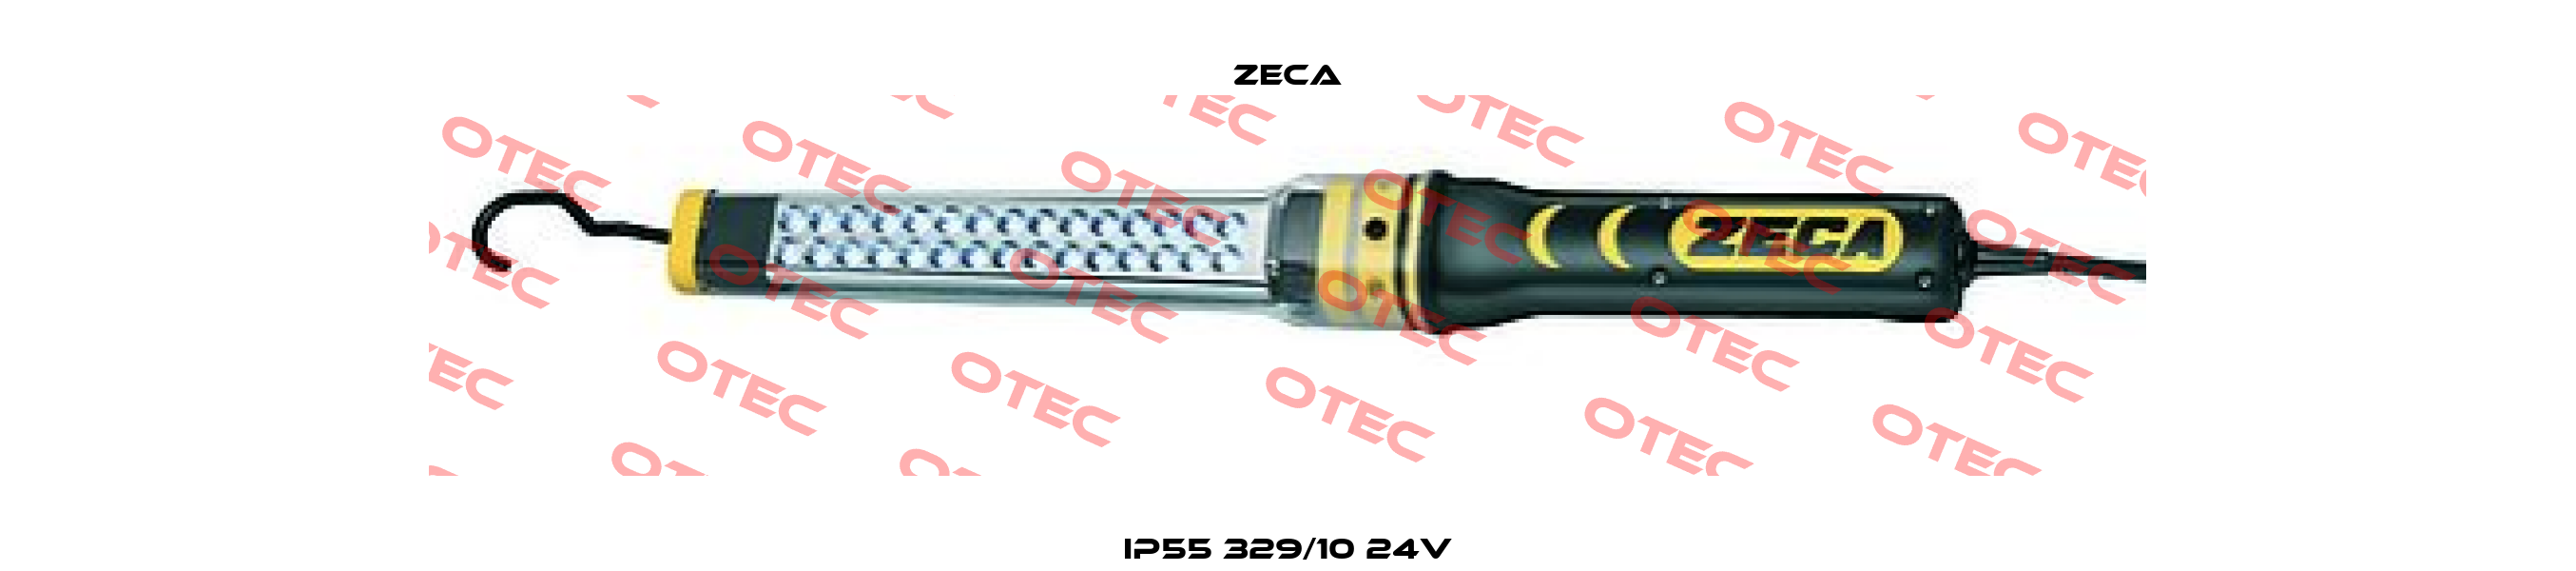 IP55 329/10 24V Zeca